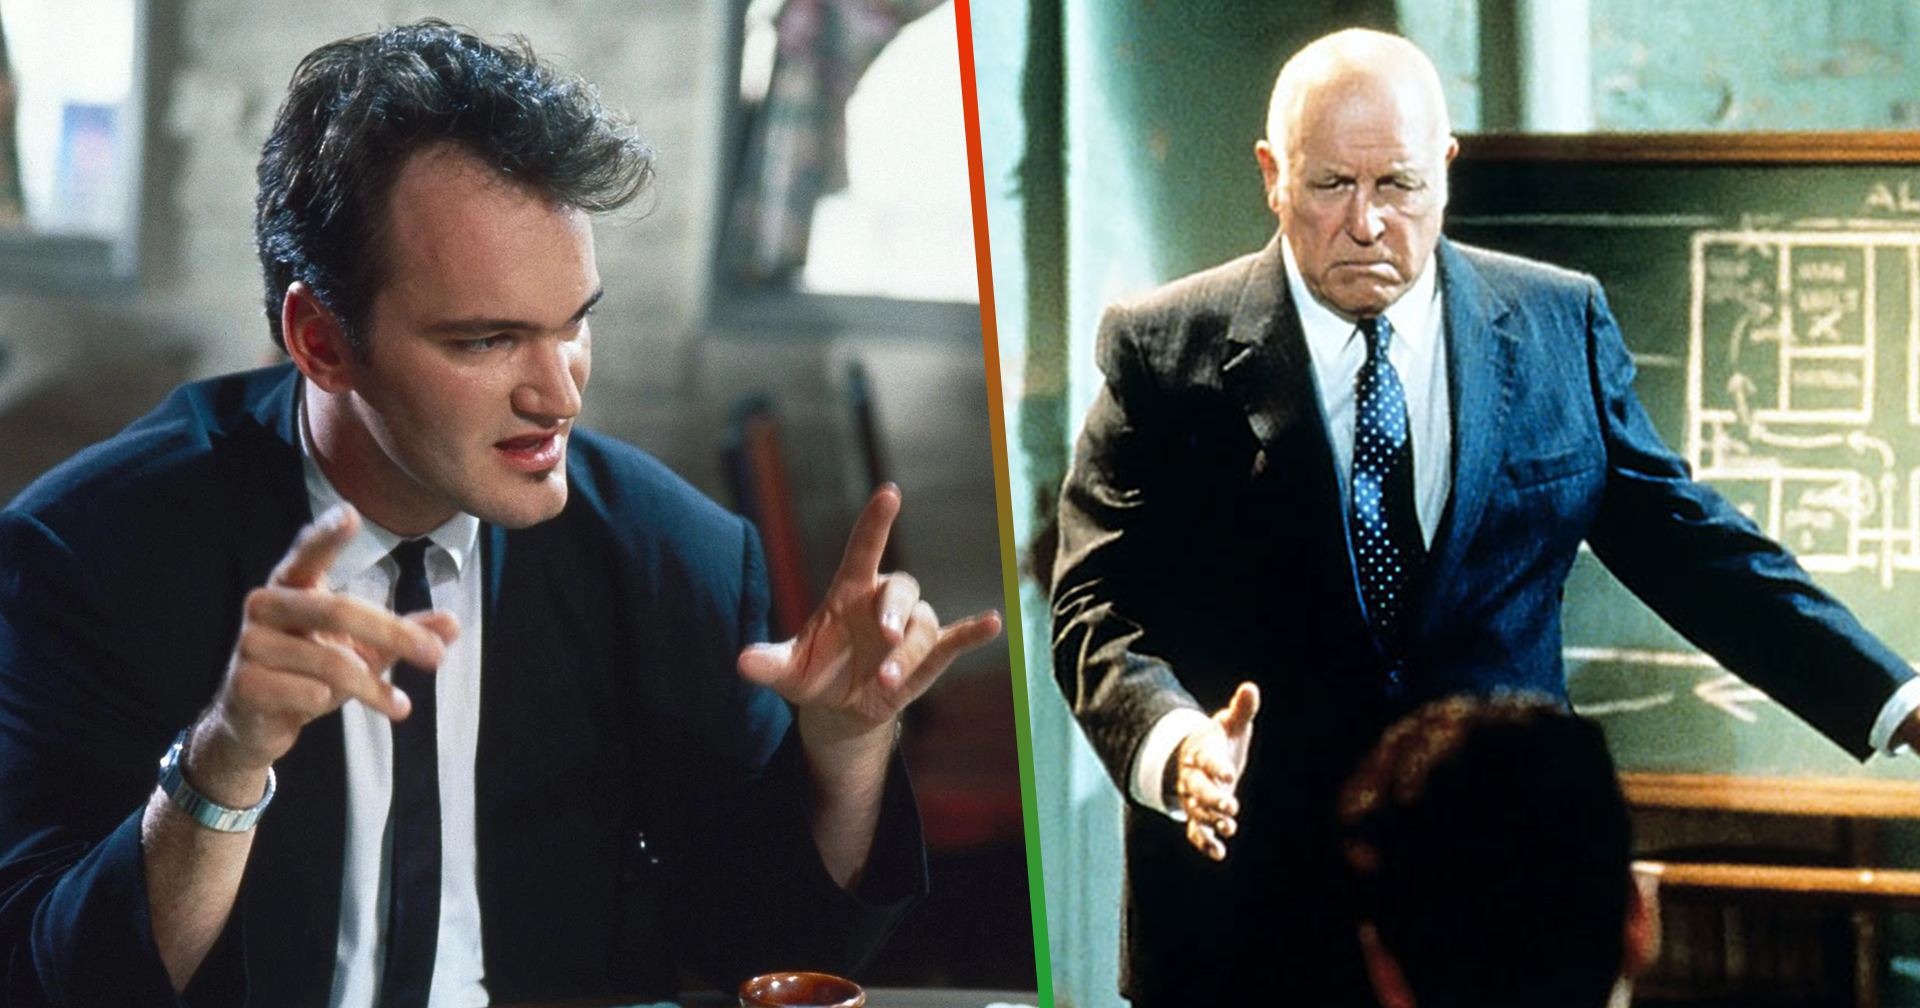 Quentin Tarantino เคยทะเลาะชกต่อยกับ Lawrence Tierney กลางกองถ่าย ‘Reservoir Dogs’ หลังถ่ายทำไม่ถึงสัปดาห์